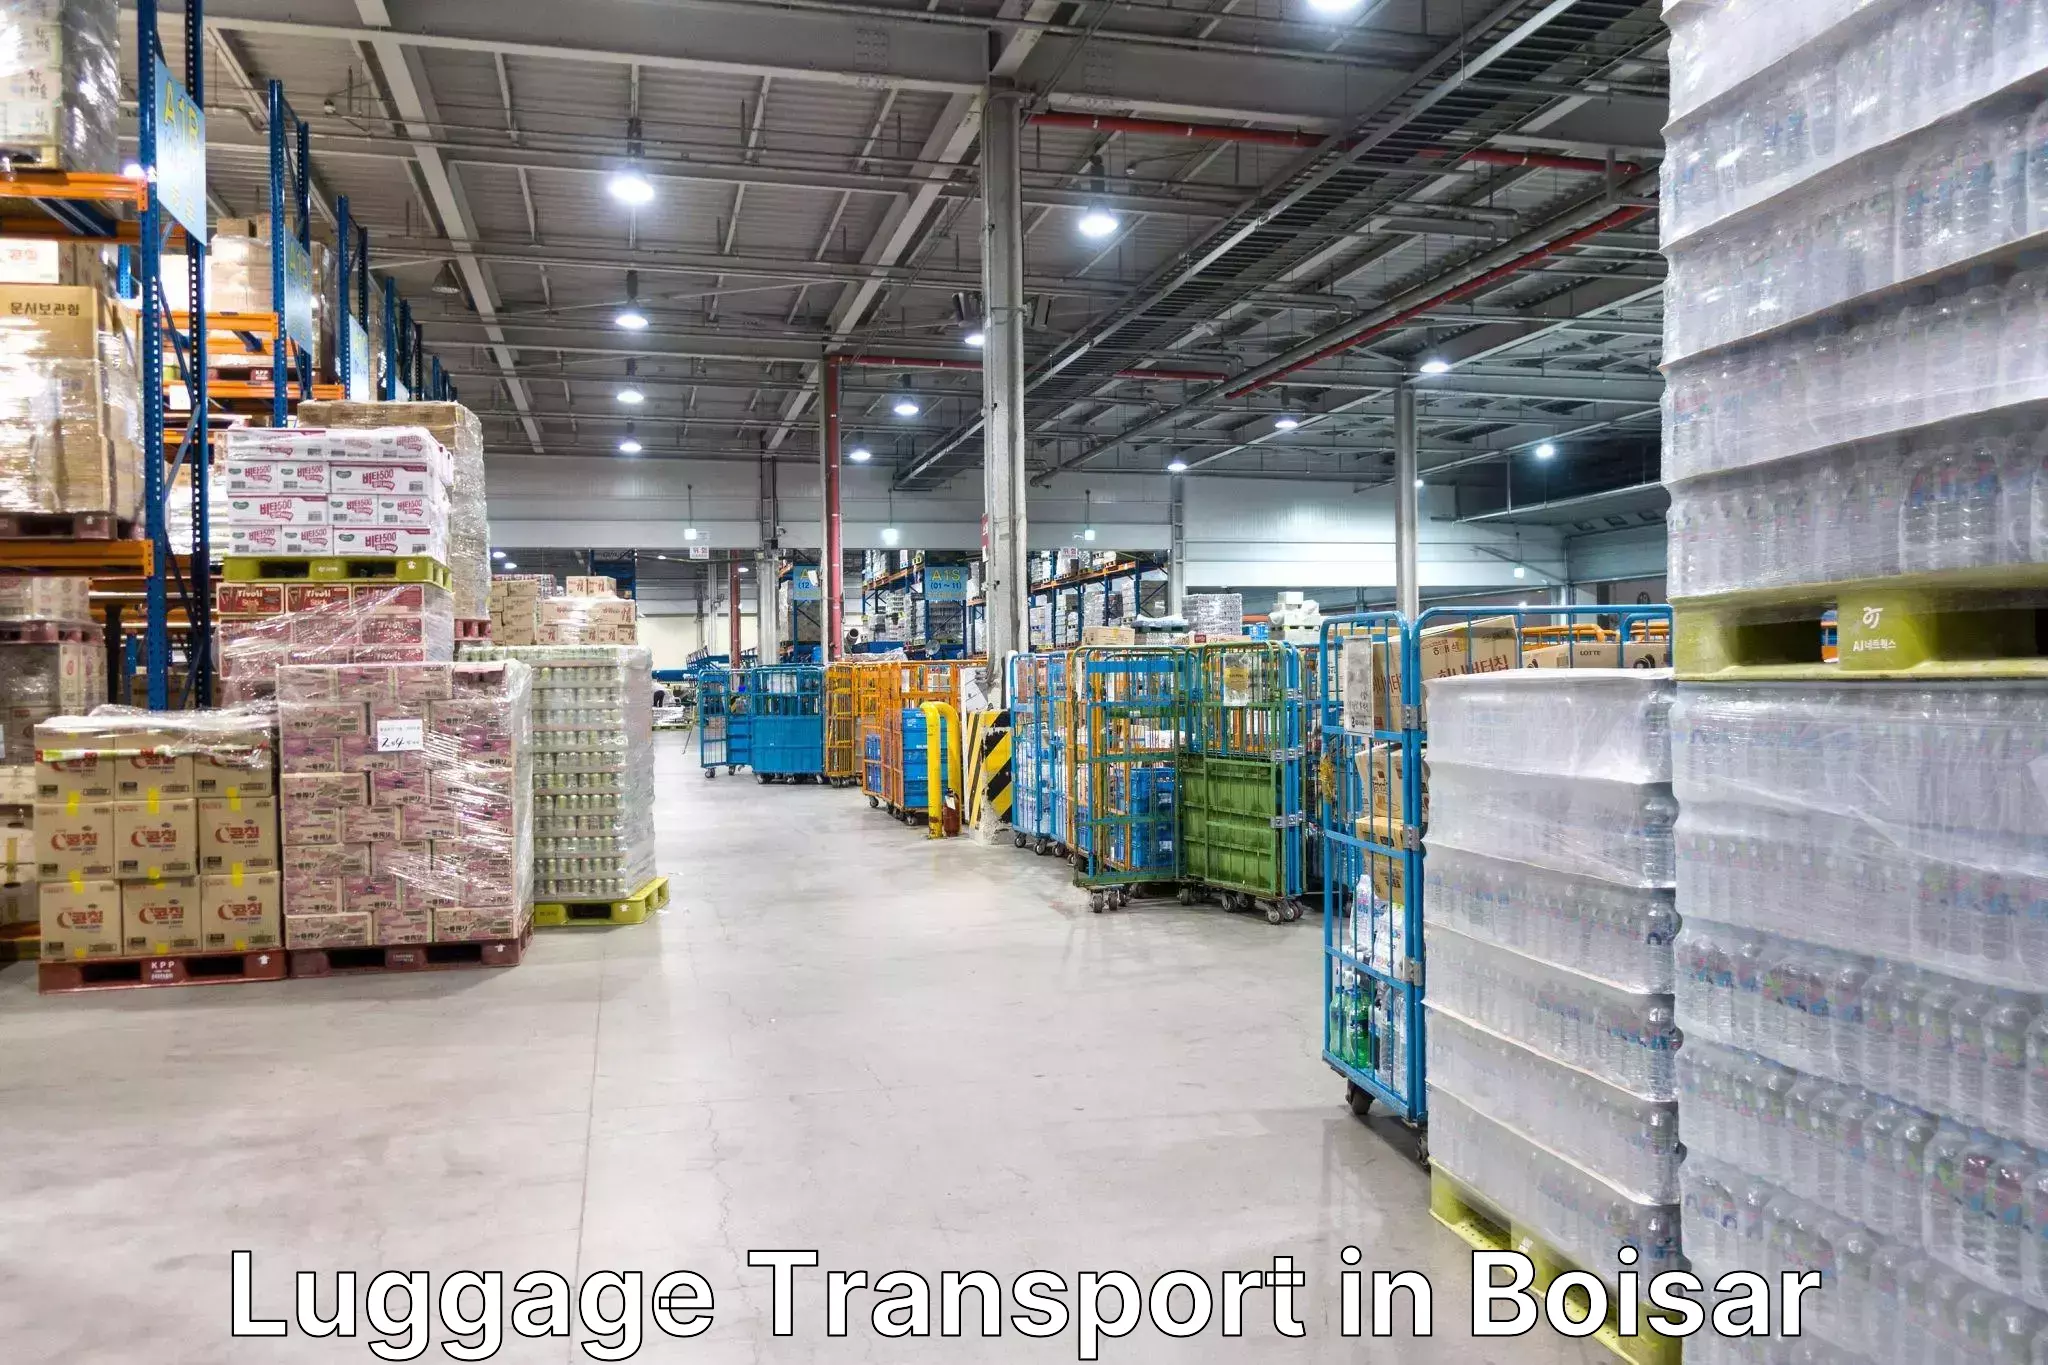 Luggage transport service in Boisar